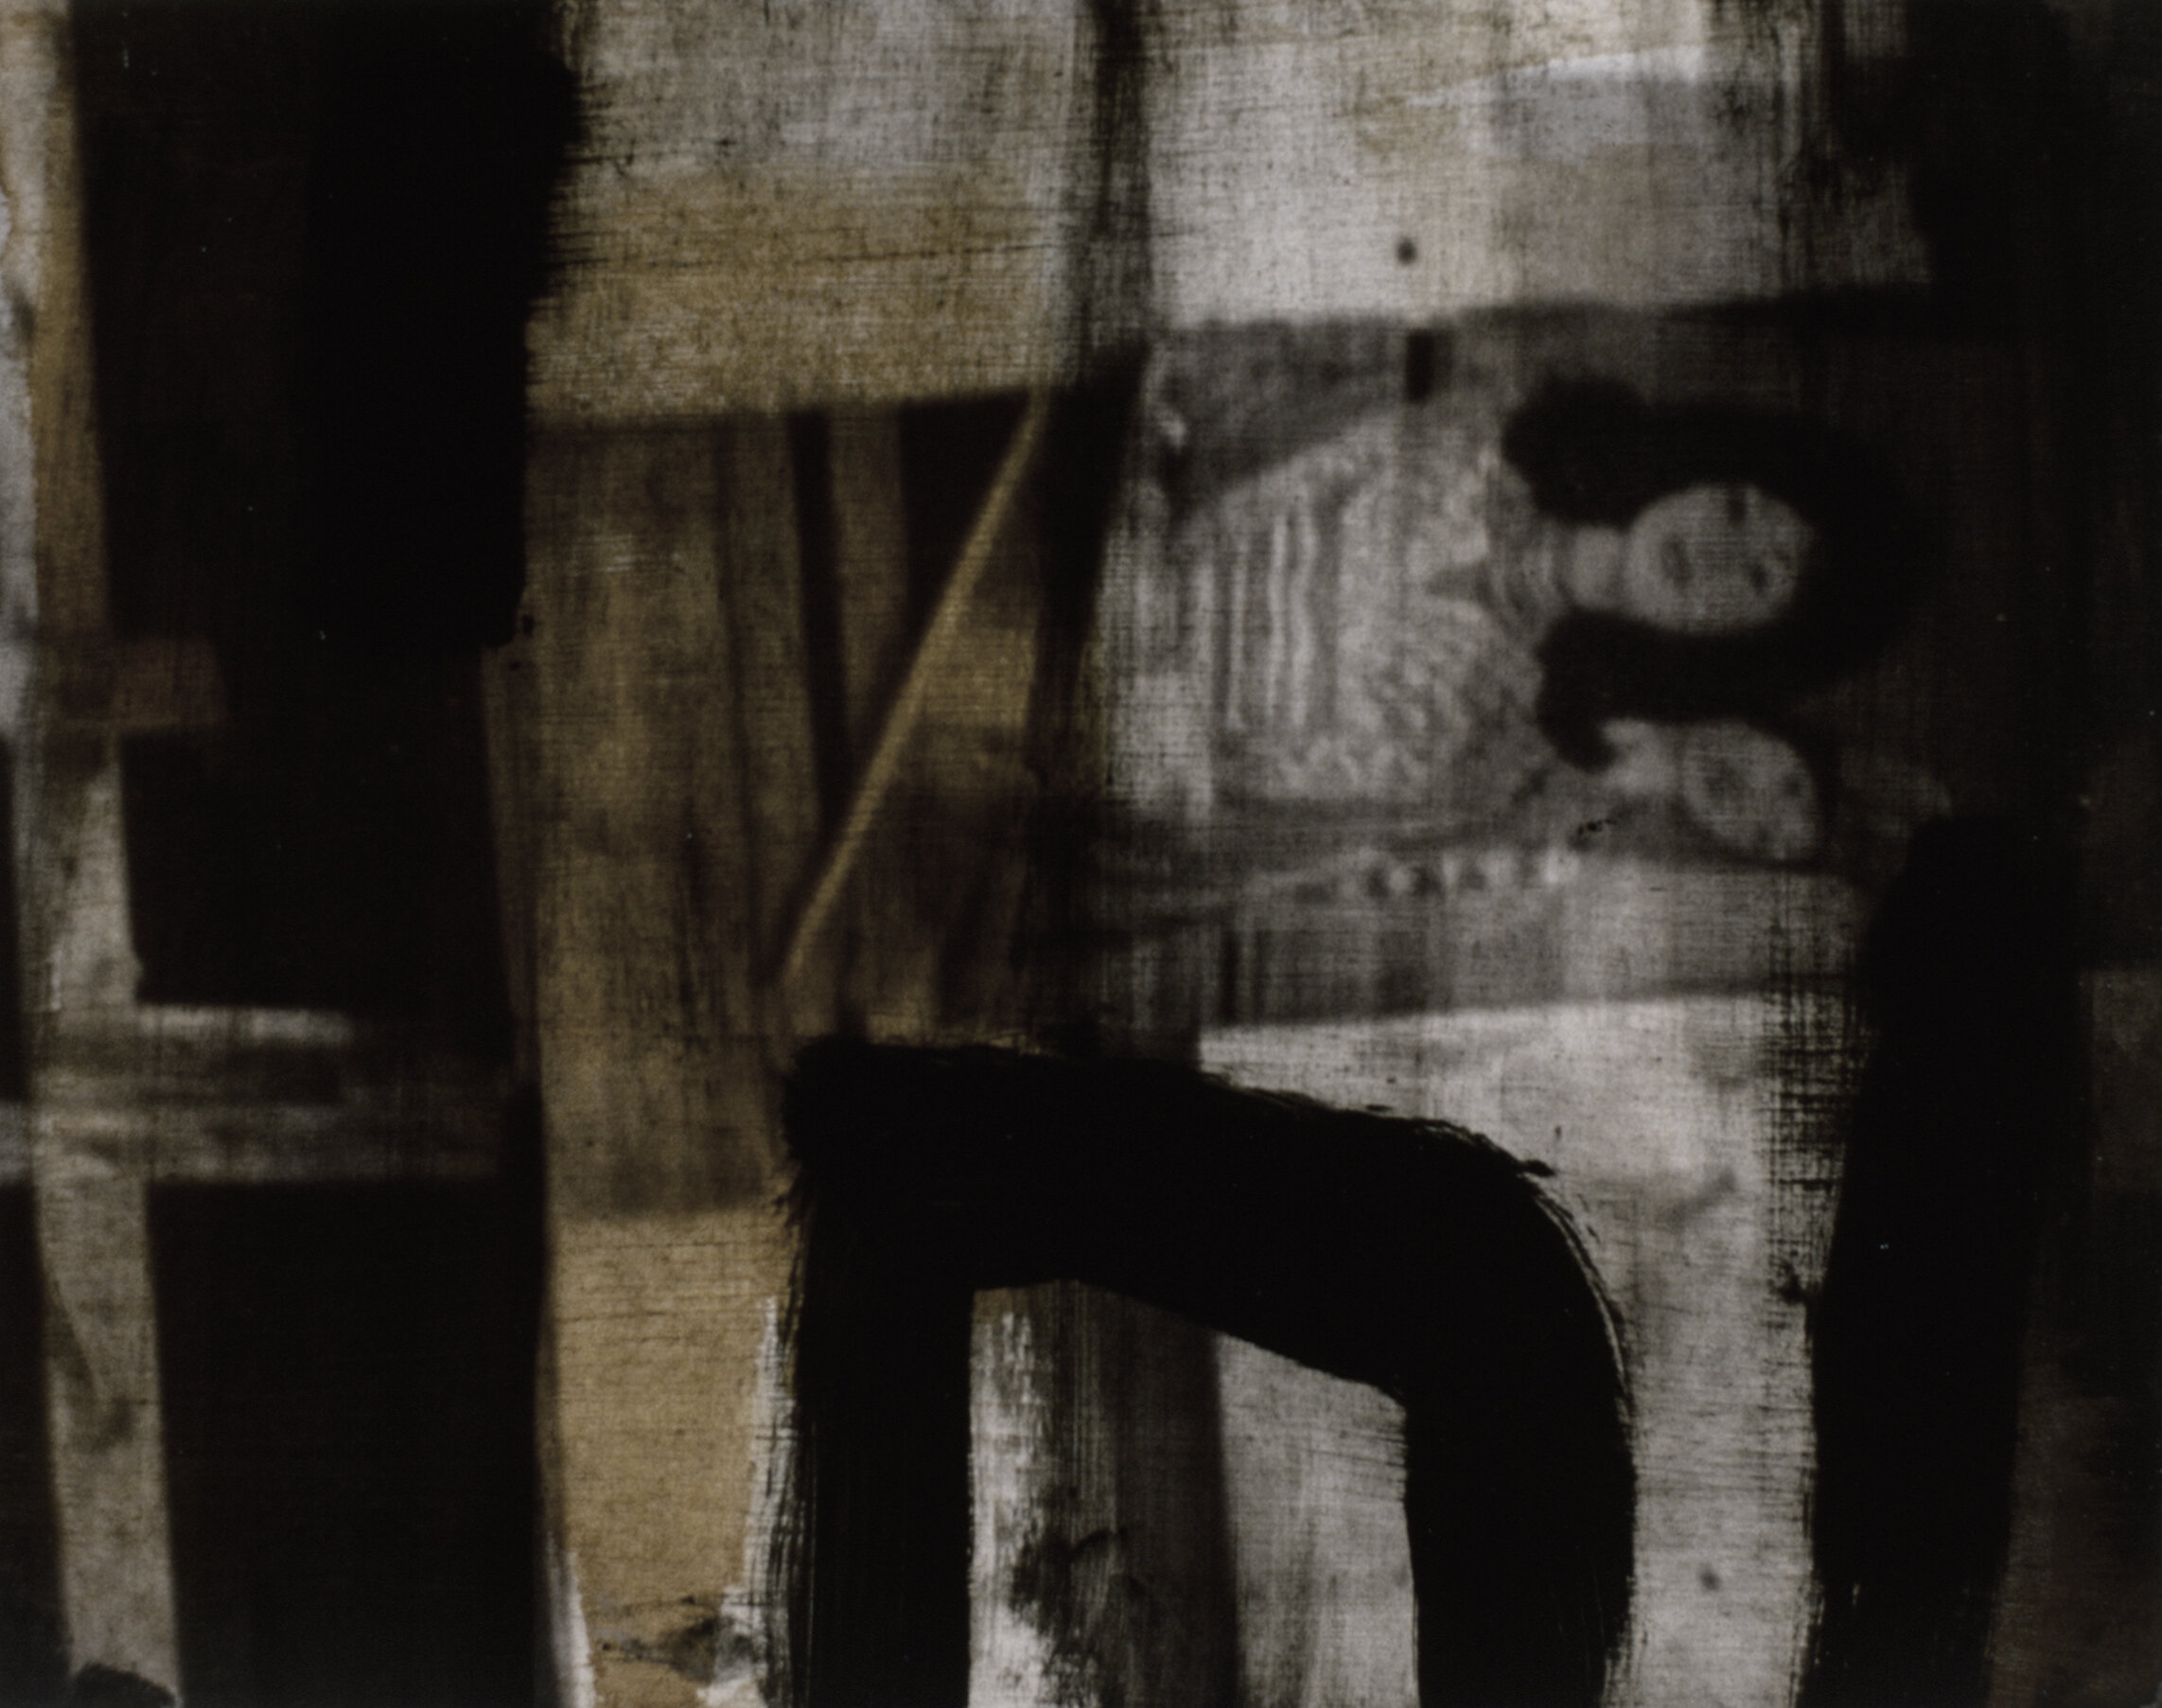   Untitled 18.P9       2002  Digital Image , Oil, Paper on Panel      8” x 10”   